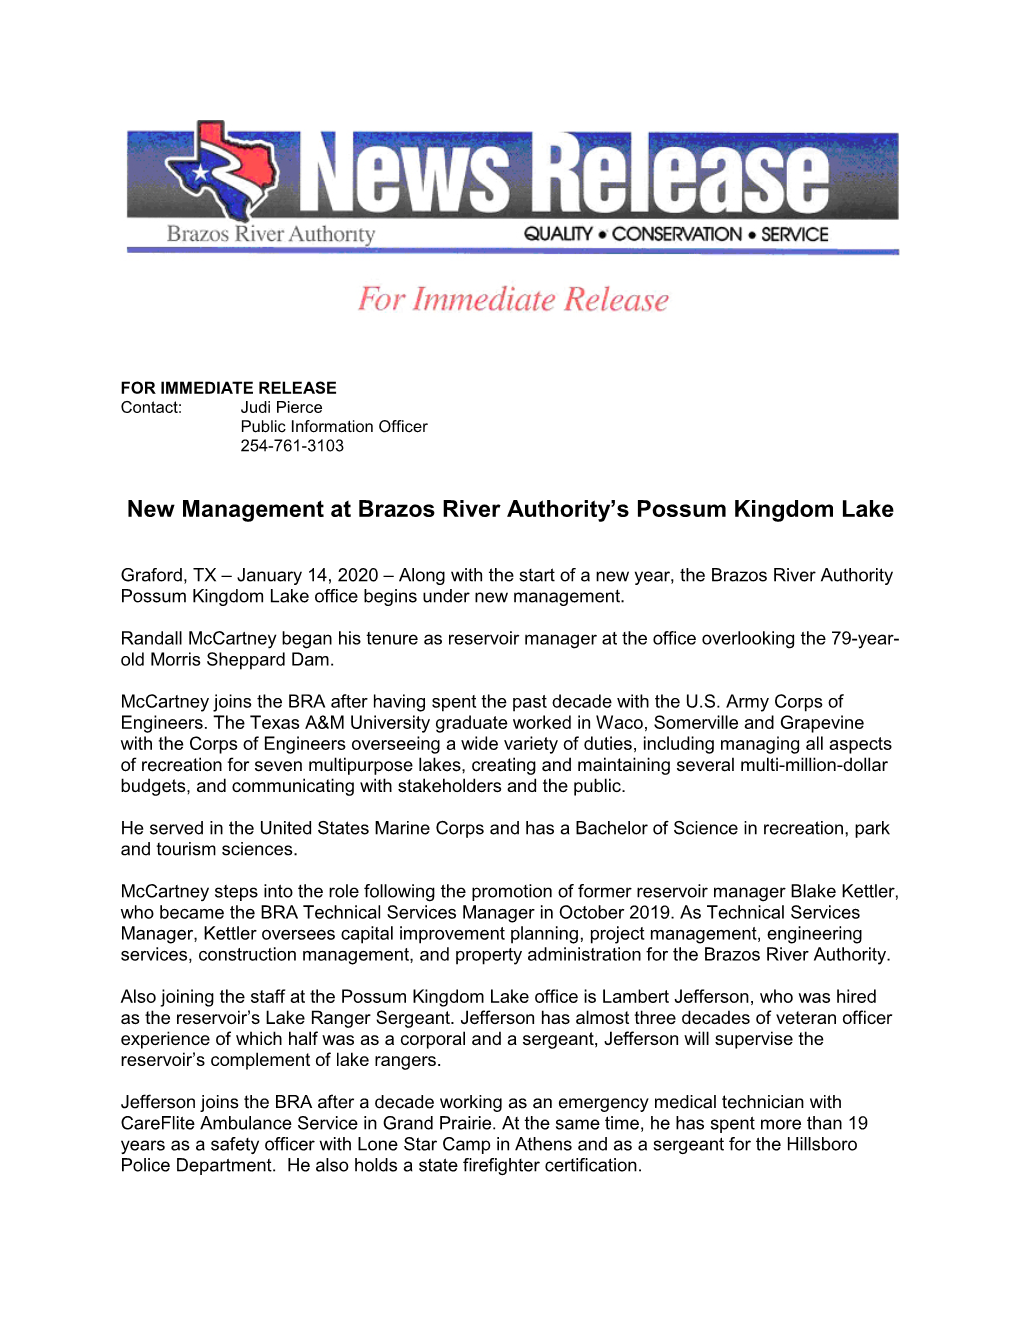 New Management at Brazos River Authority's Possum Kingdom Lake